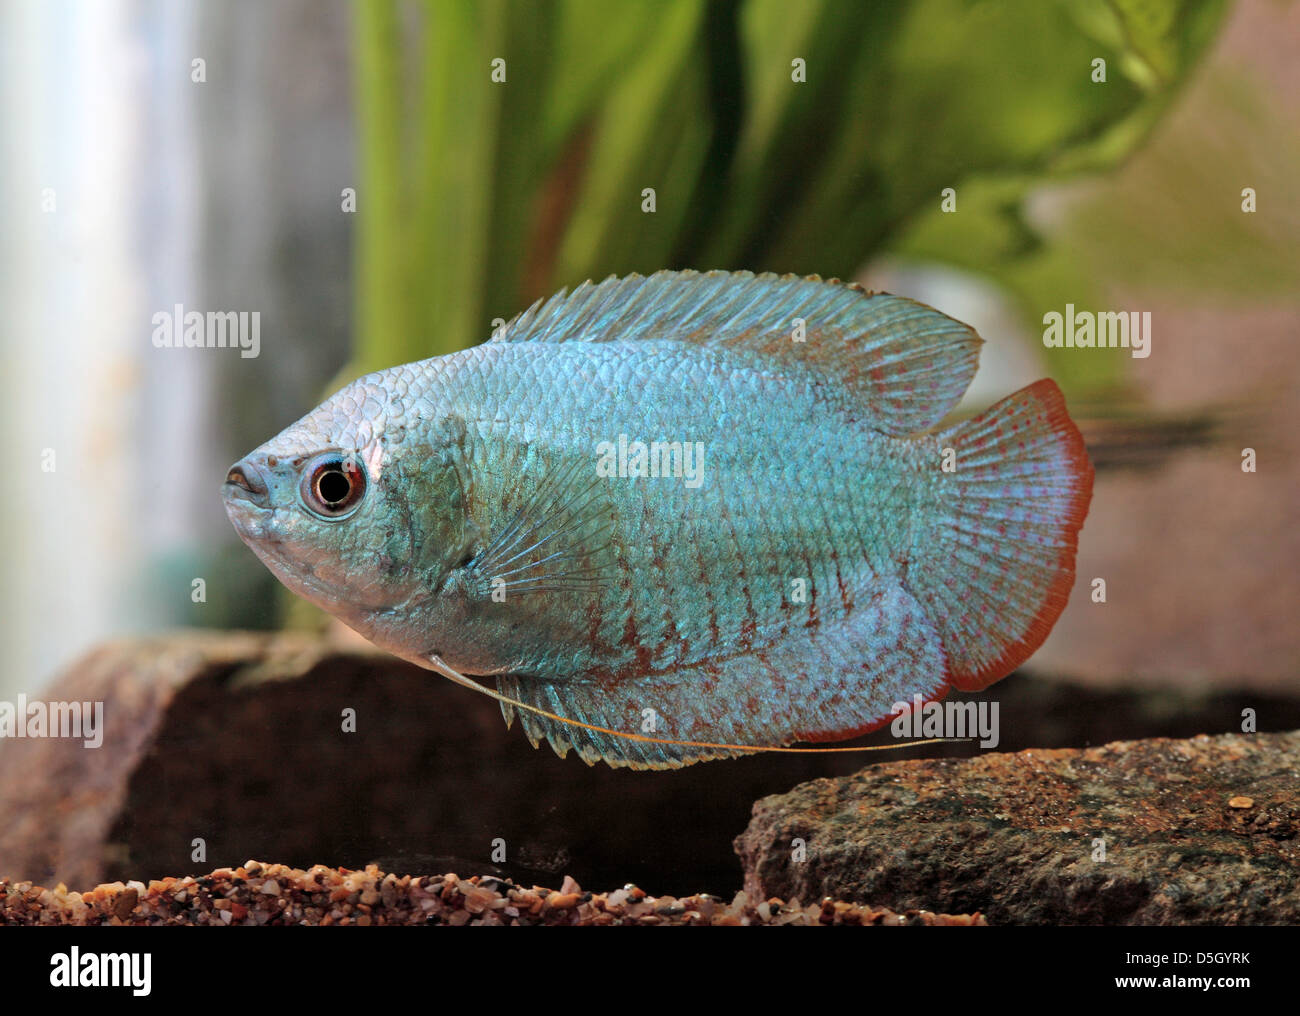 Dwarf Gourami [ Colisa ] in aquarium Stock Photo